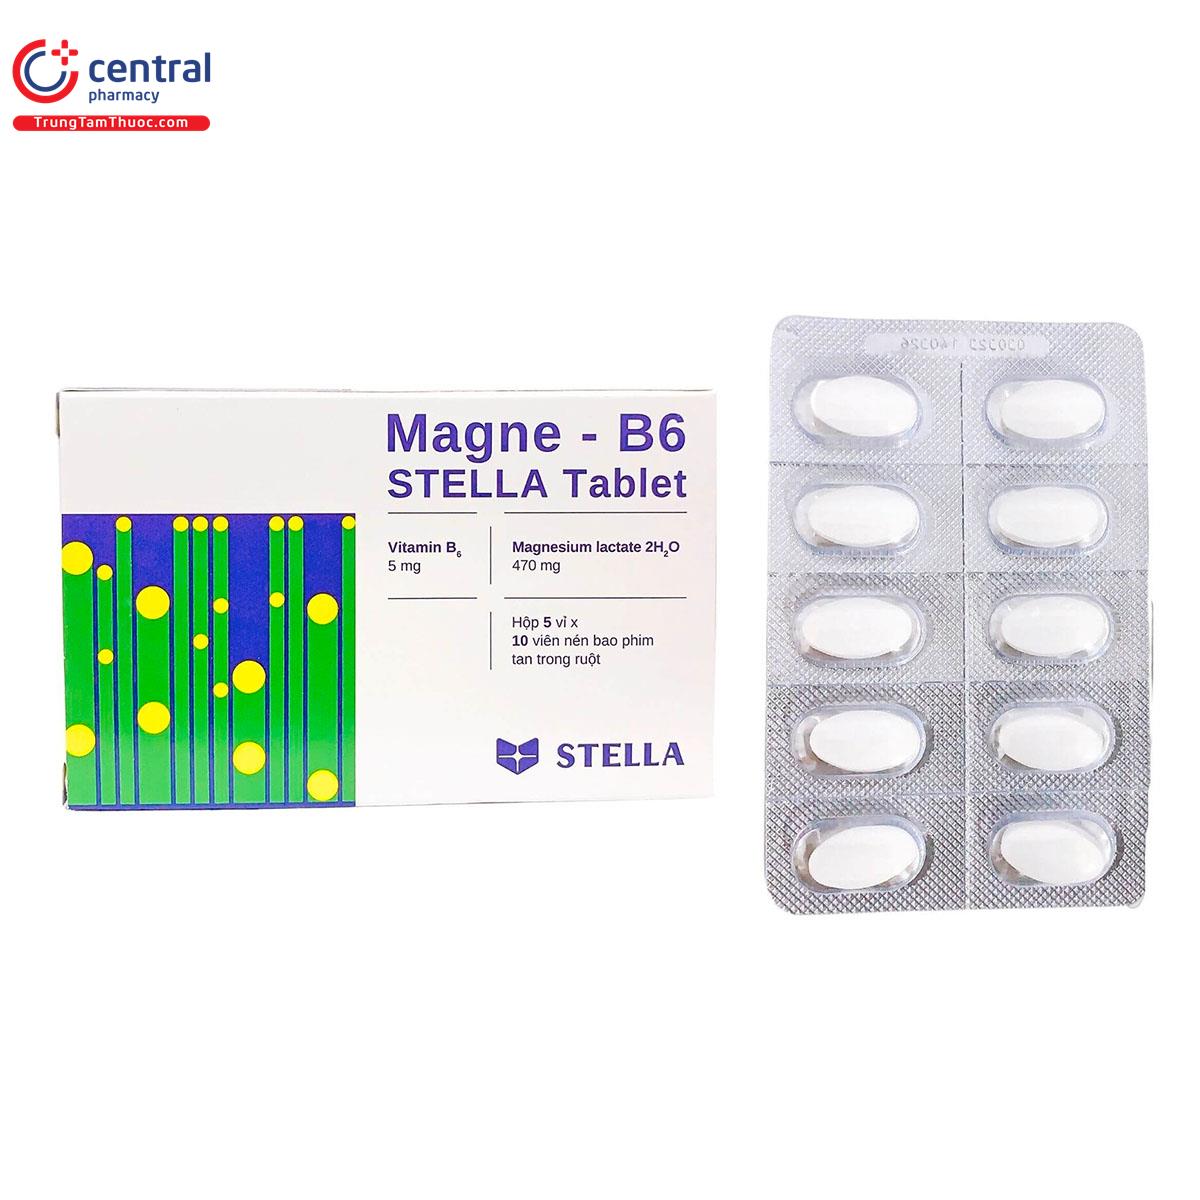 Thuốc Magne - B6 Stella Tablet điều trị hạ magnesium huyết